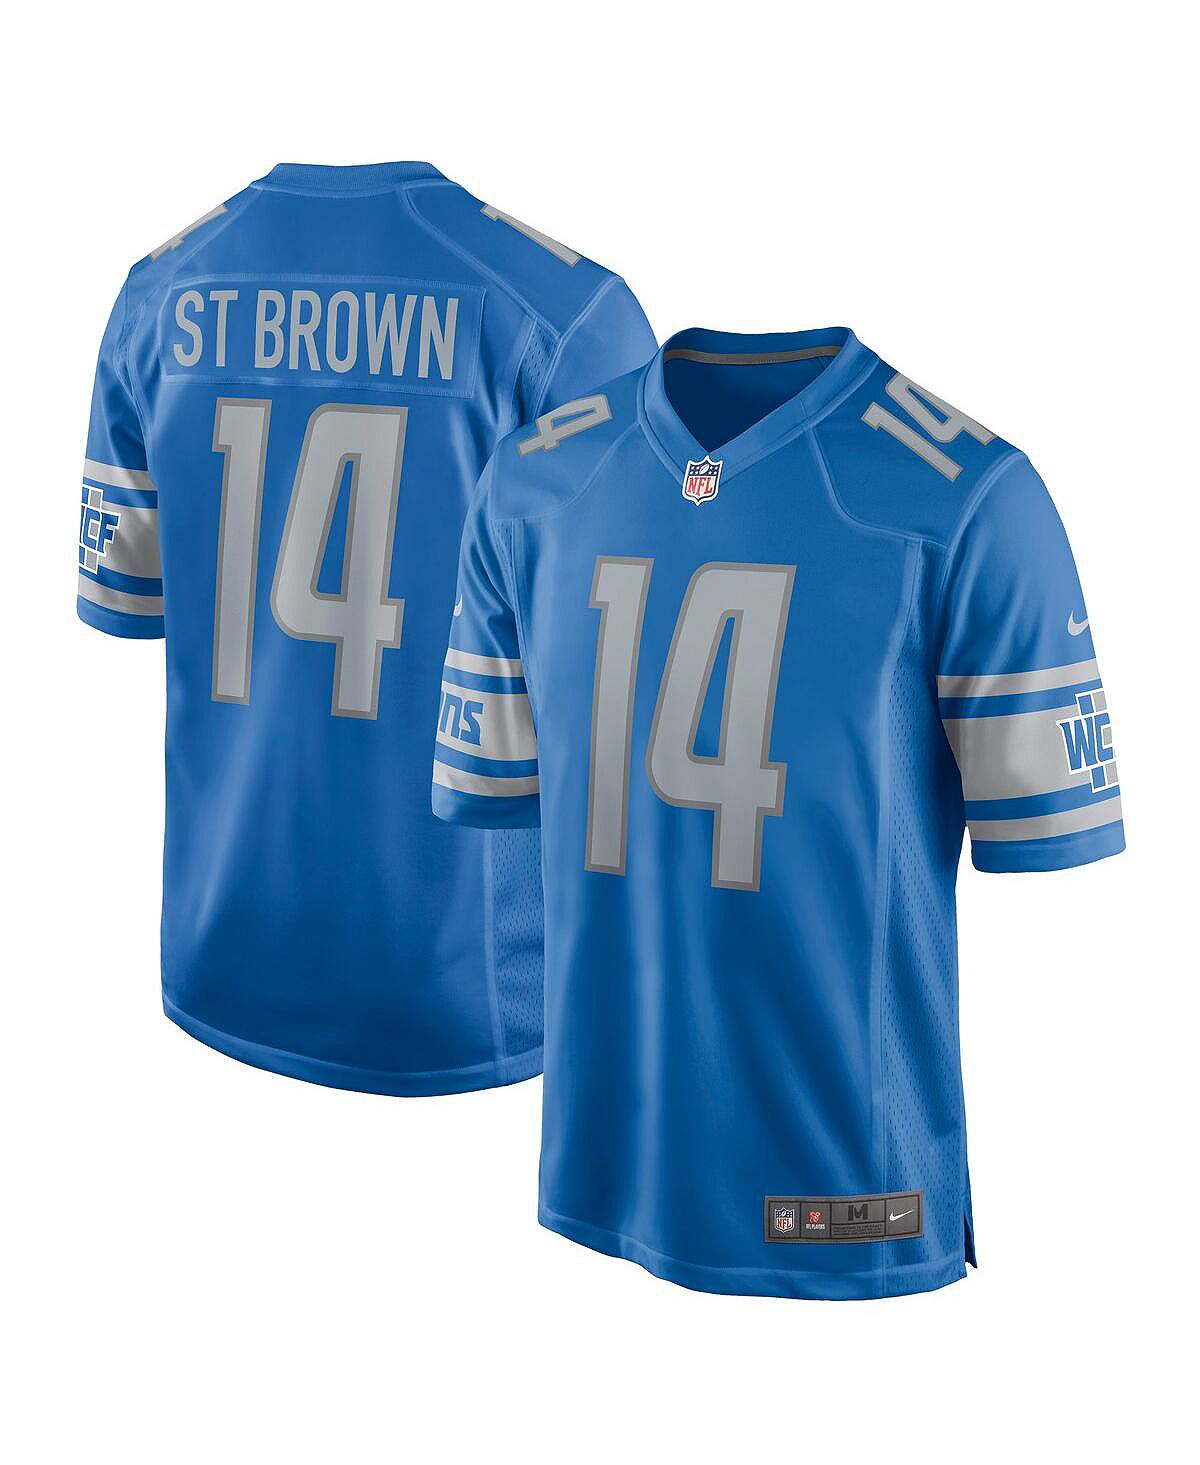 роза корал лайонс роуз кордес Мужская футболка amon-ra st. brown blue detroit lions game player Nike, синий